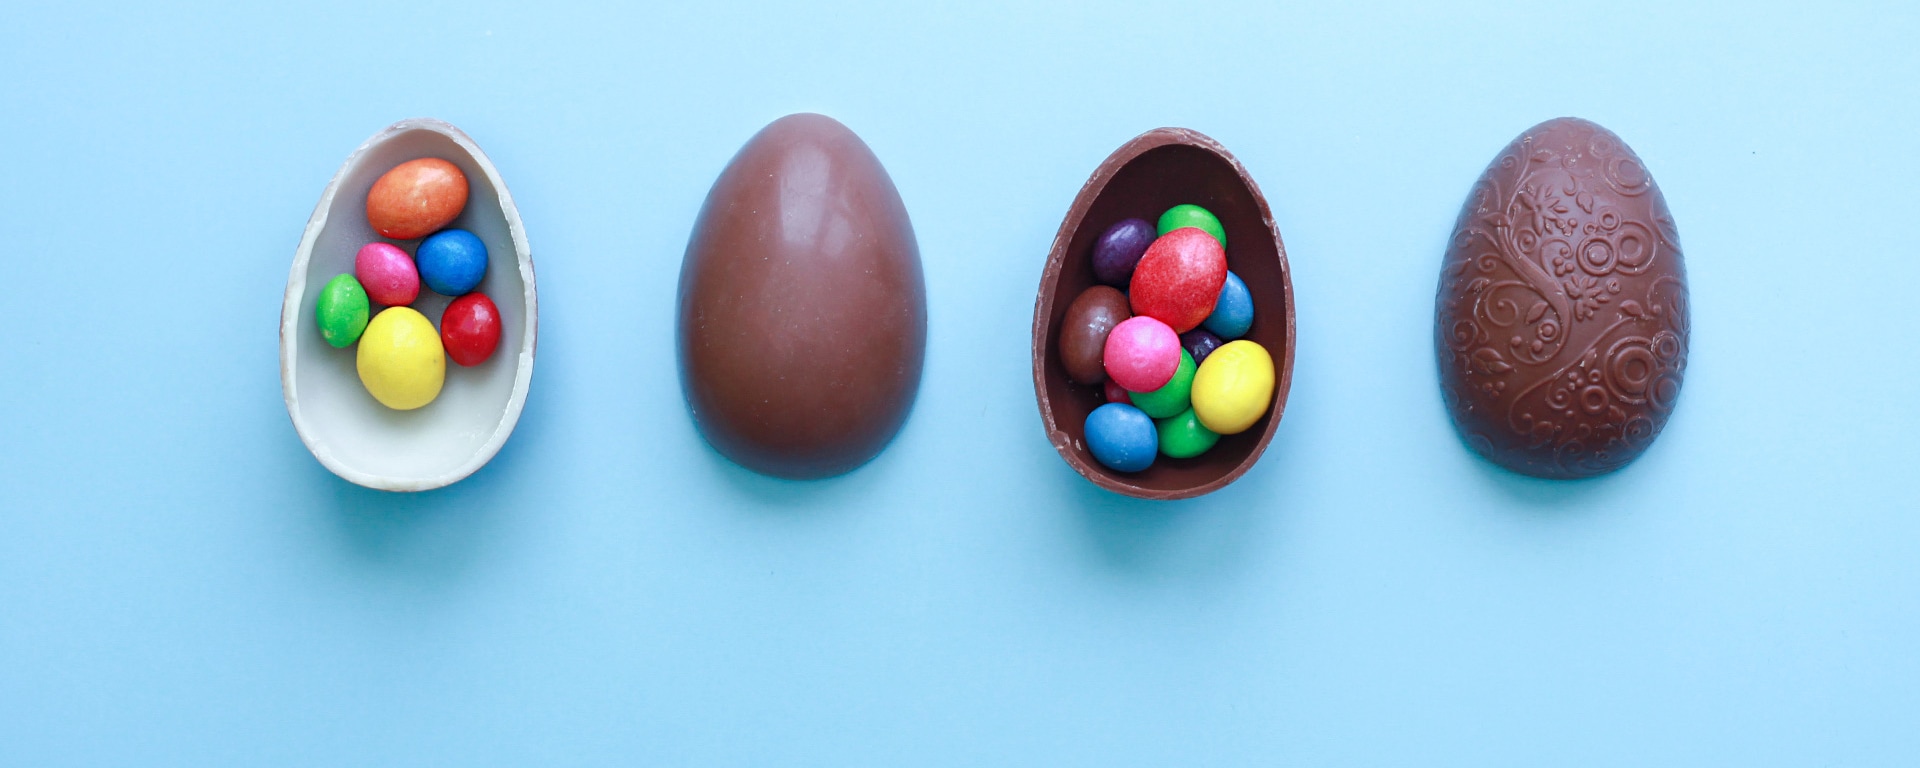 Four halves of Easter eggs lie on a light blue surface.